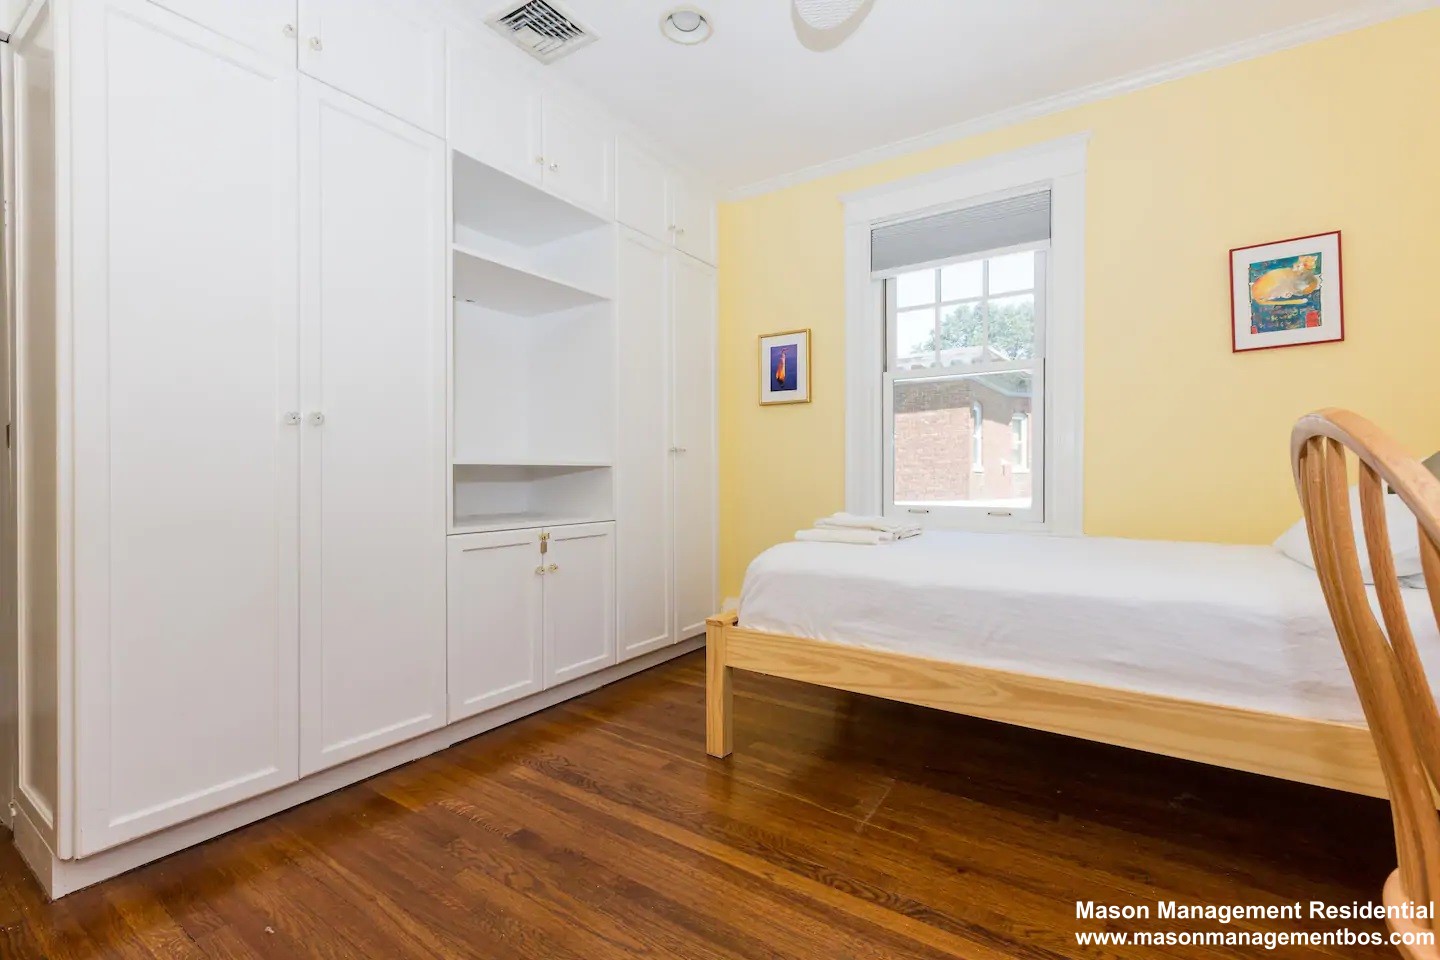 Photos of apartment on Linden Pl.,Brookline MA 02445